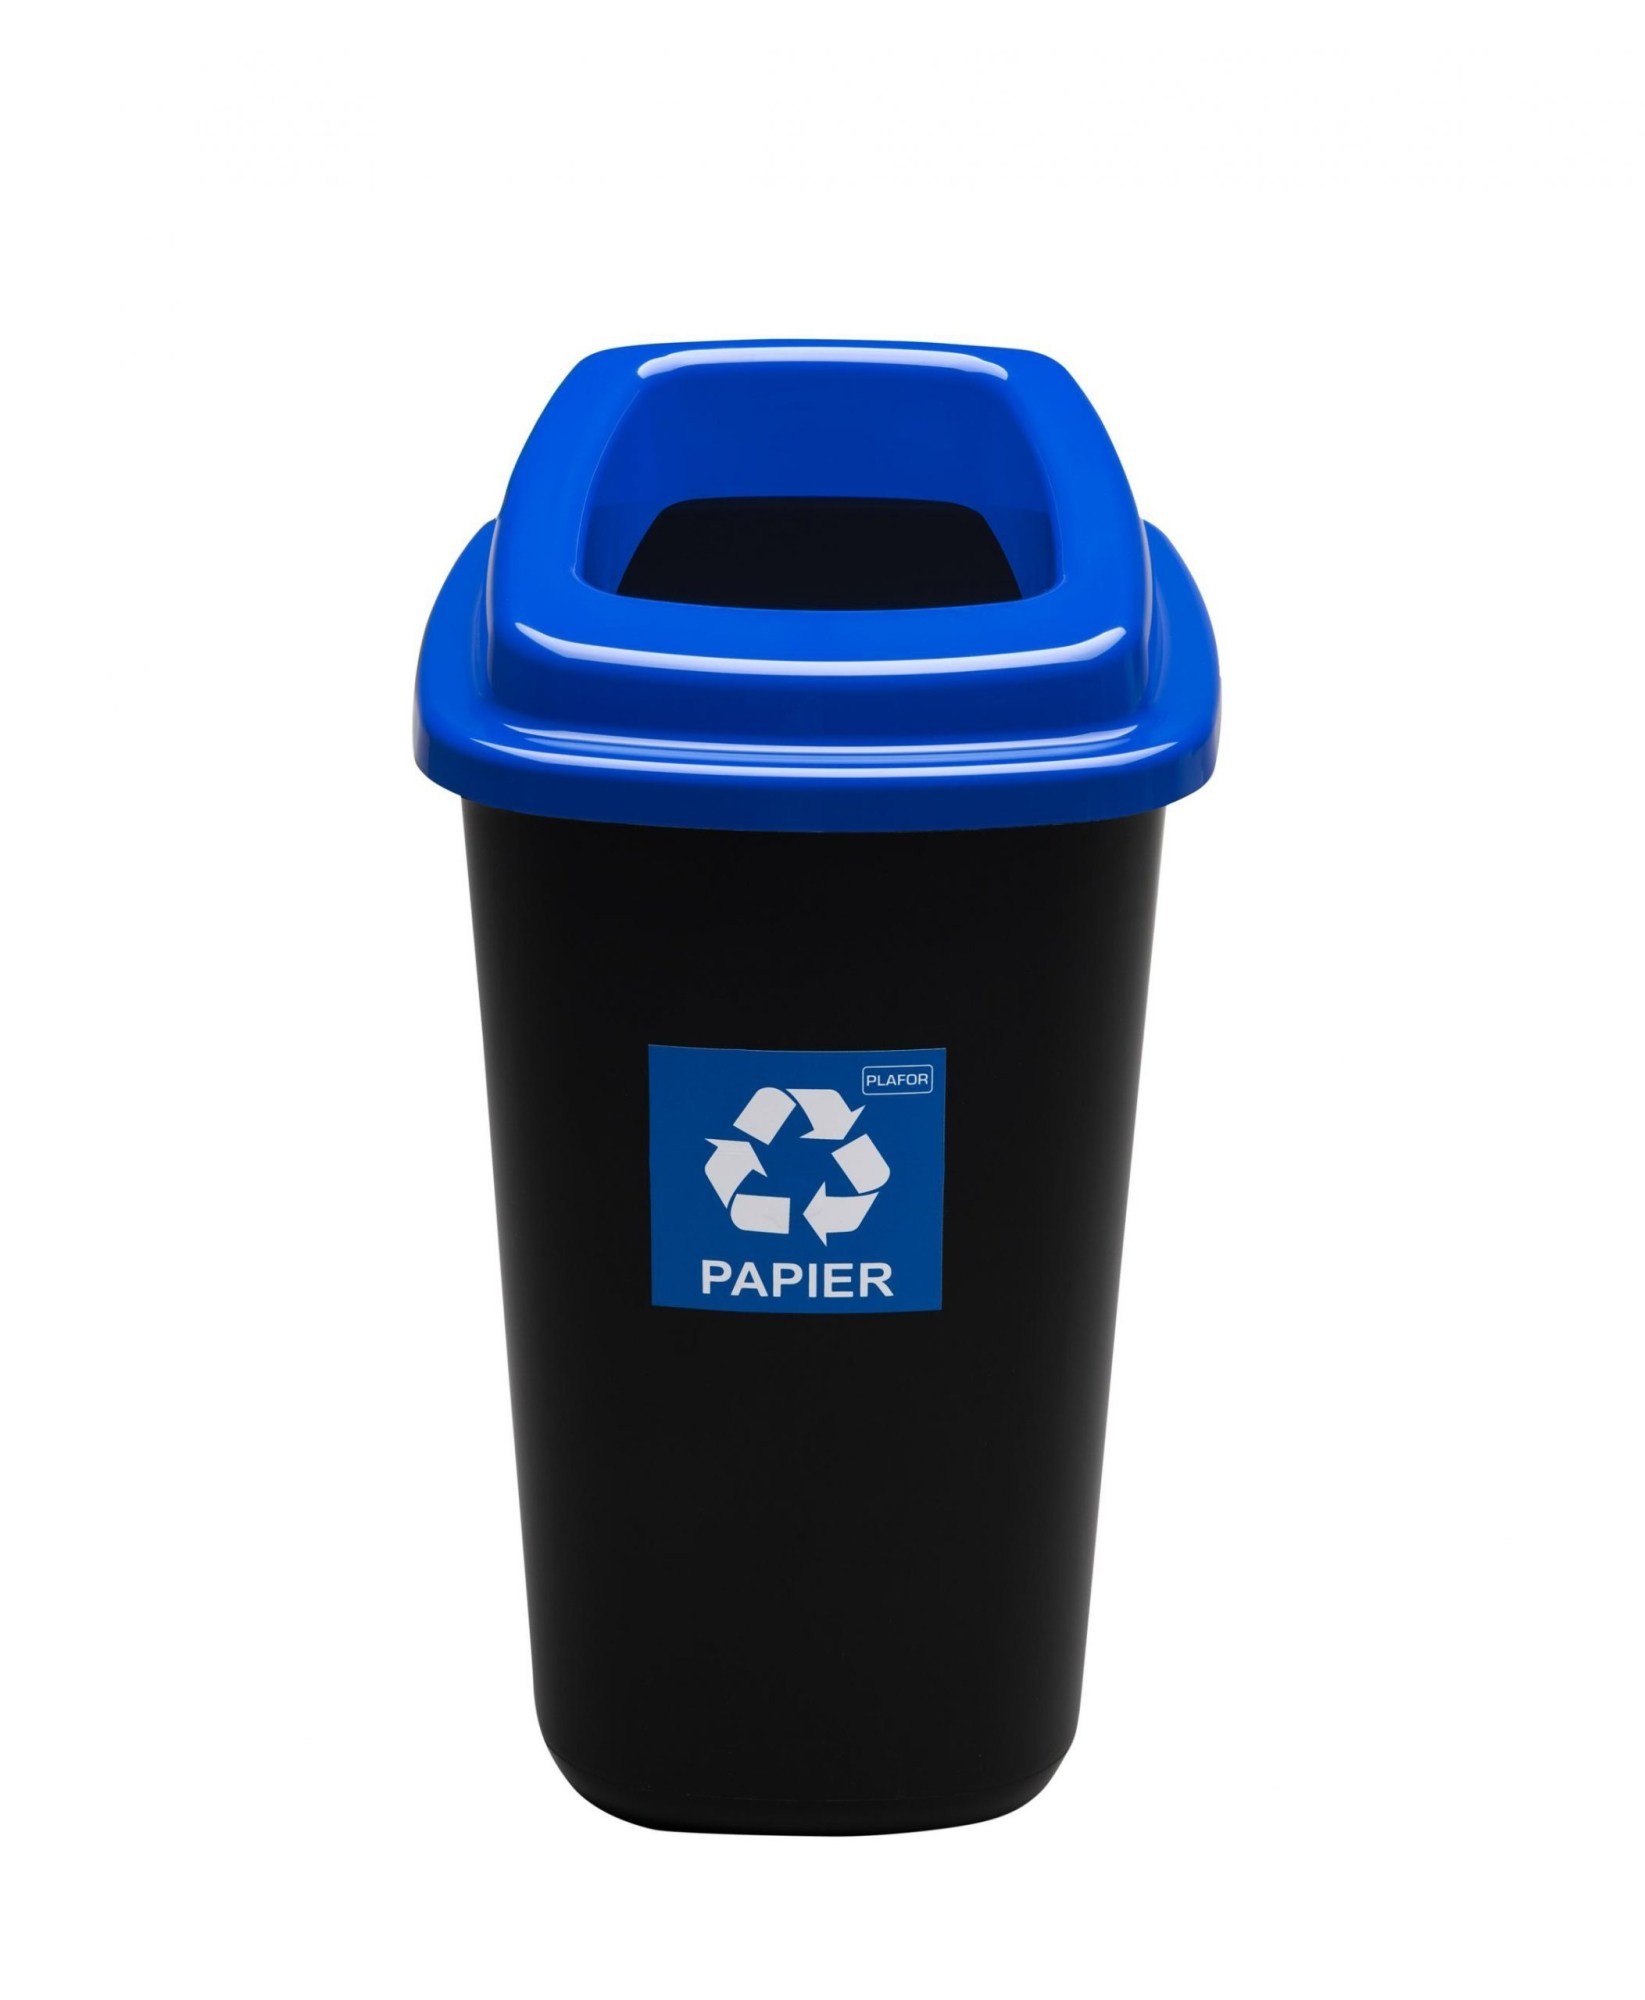 Cos plastic reciclare selectiva, capacitate 90l, PLAFOR Sort - negru cu capac albastru - hartie